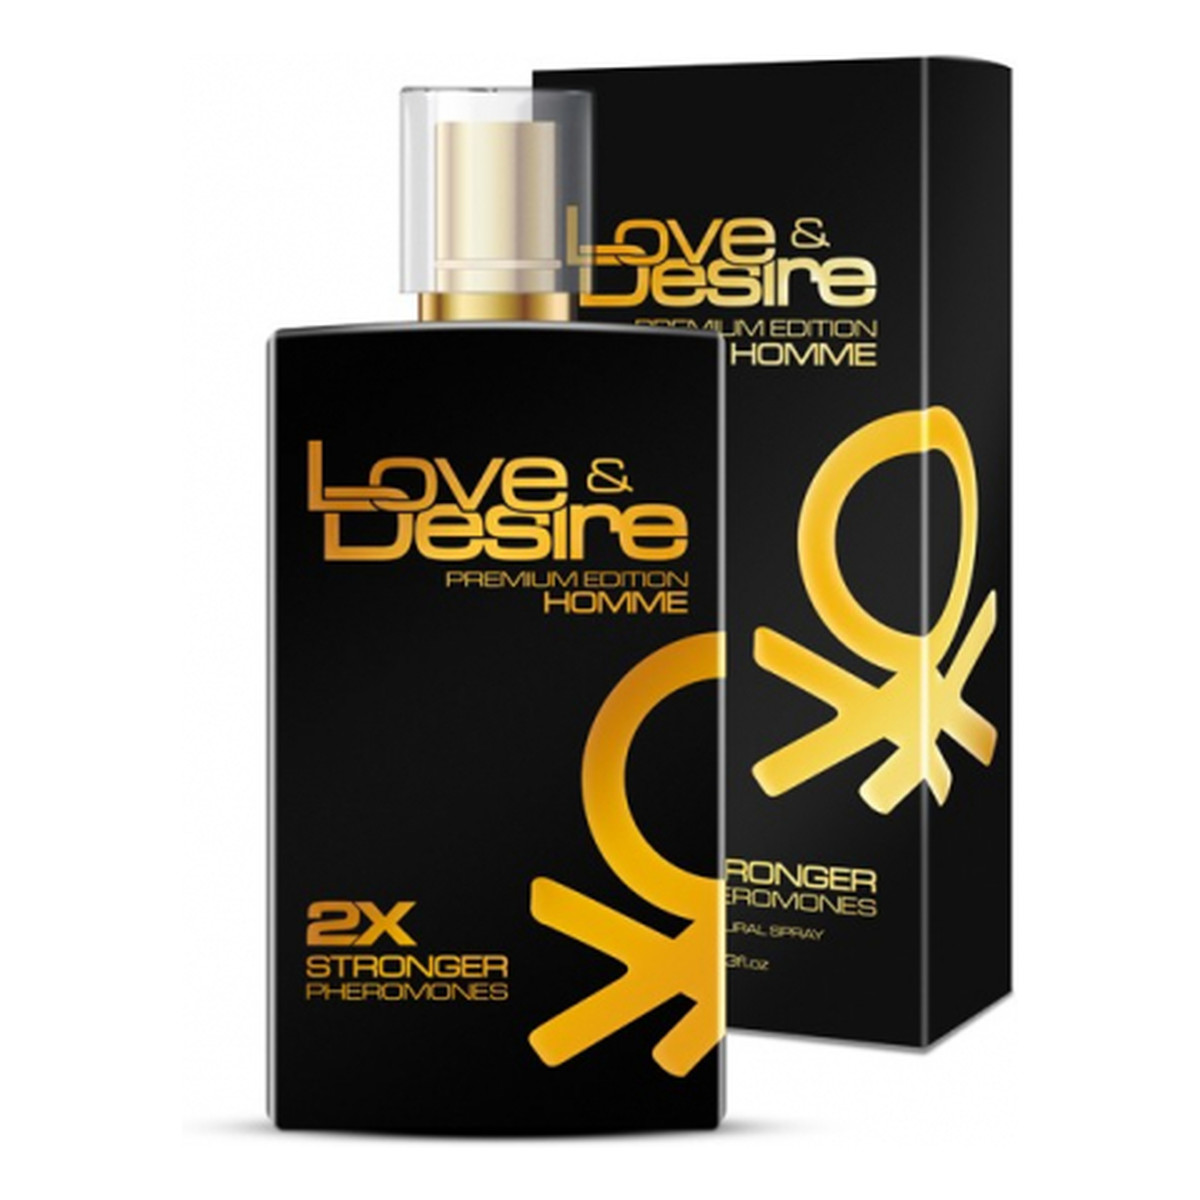 Love & Desire Premium edition homme 2x stronger pheromones feromony dla mężczyzn spray 100ml